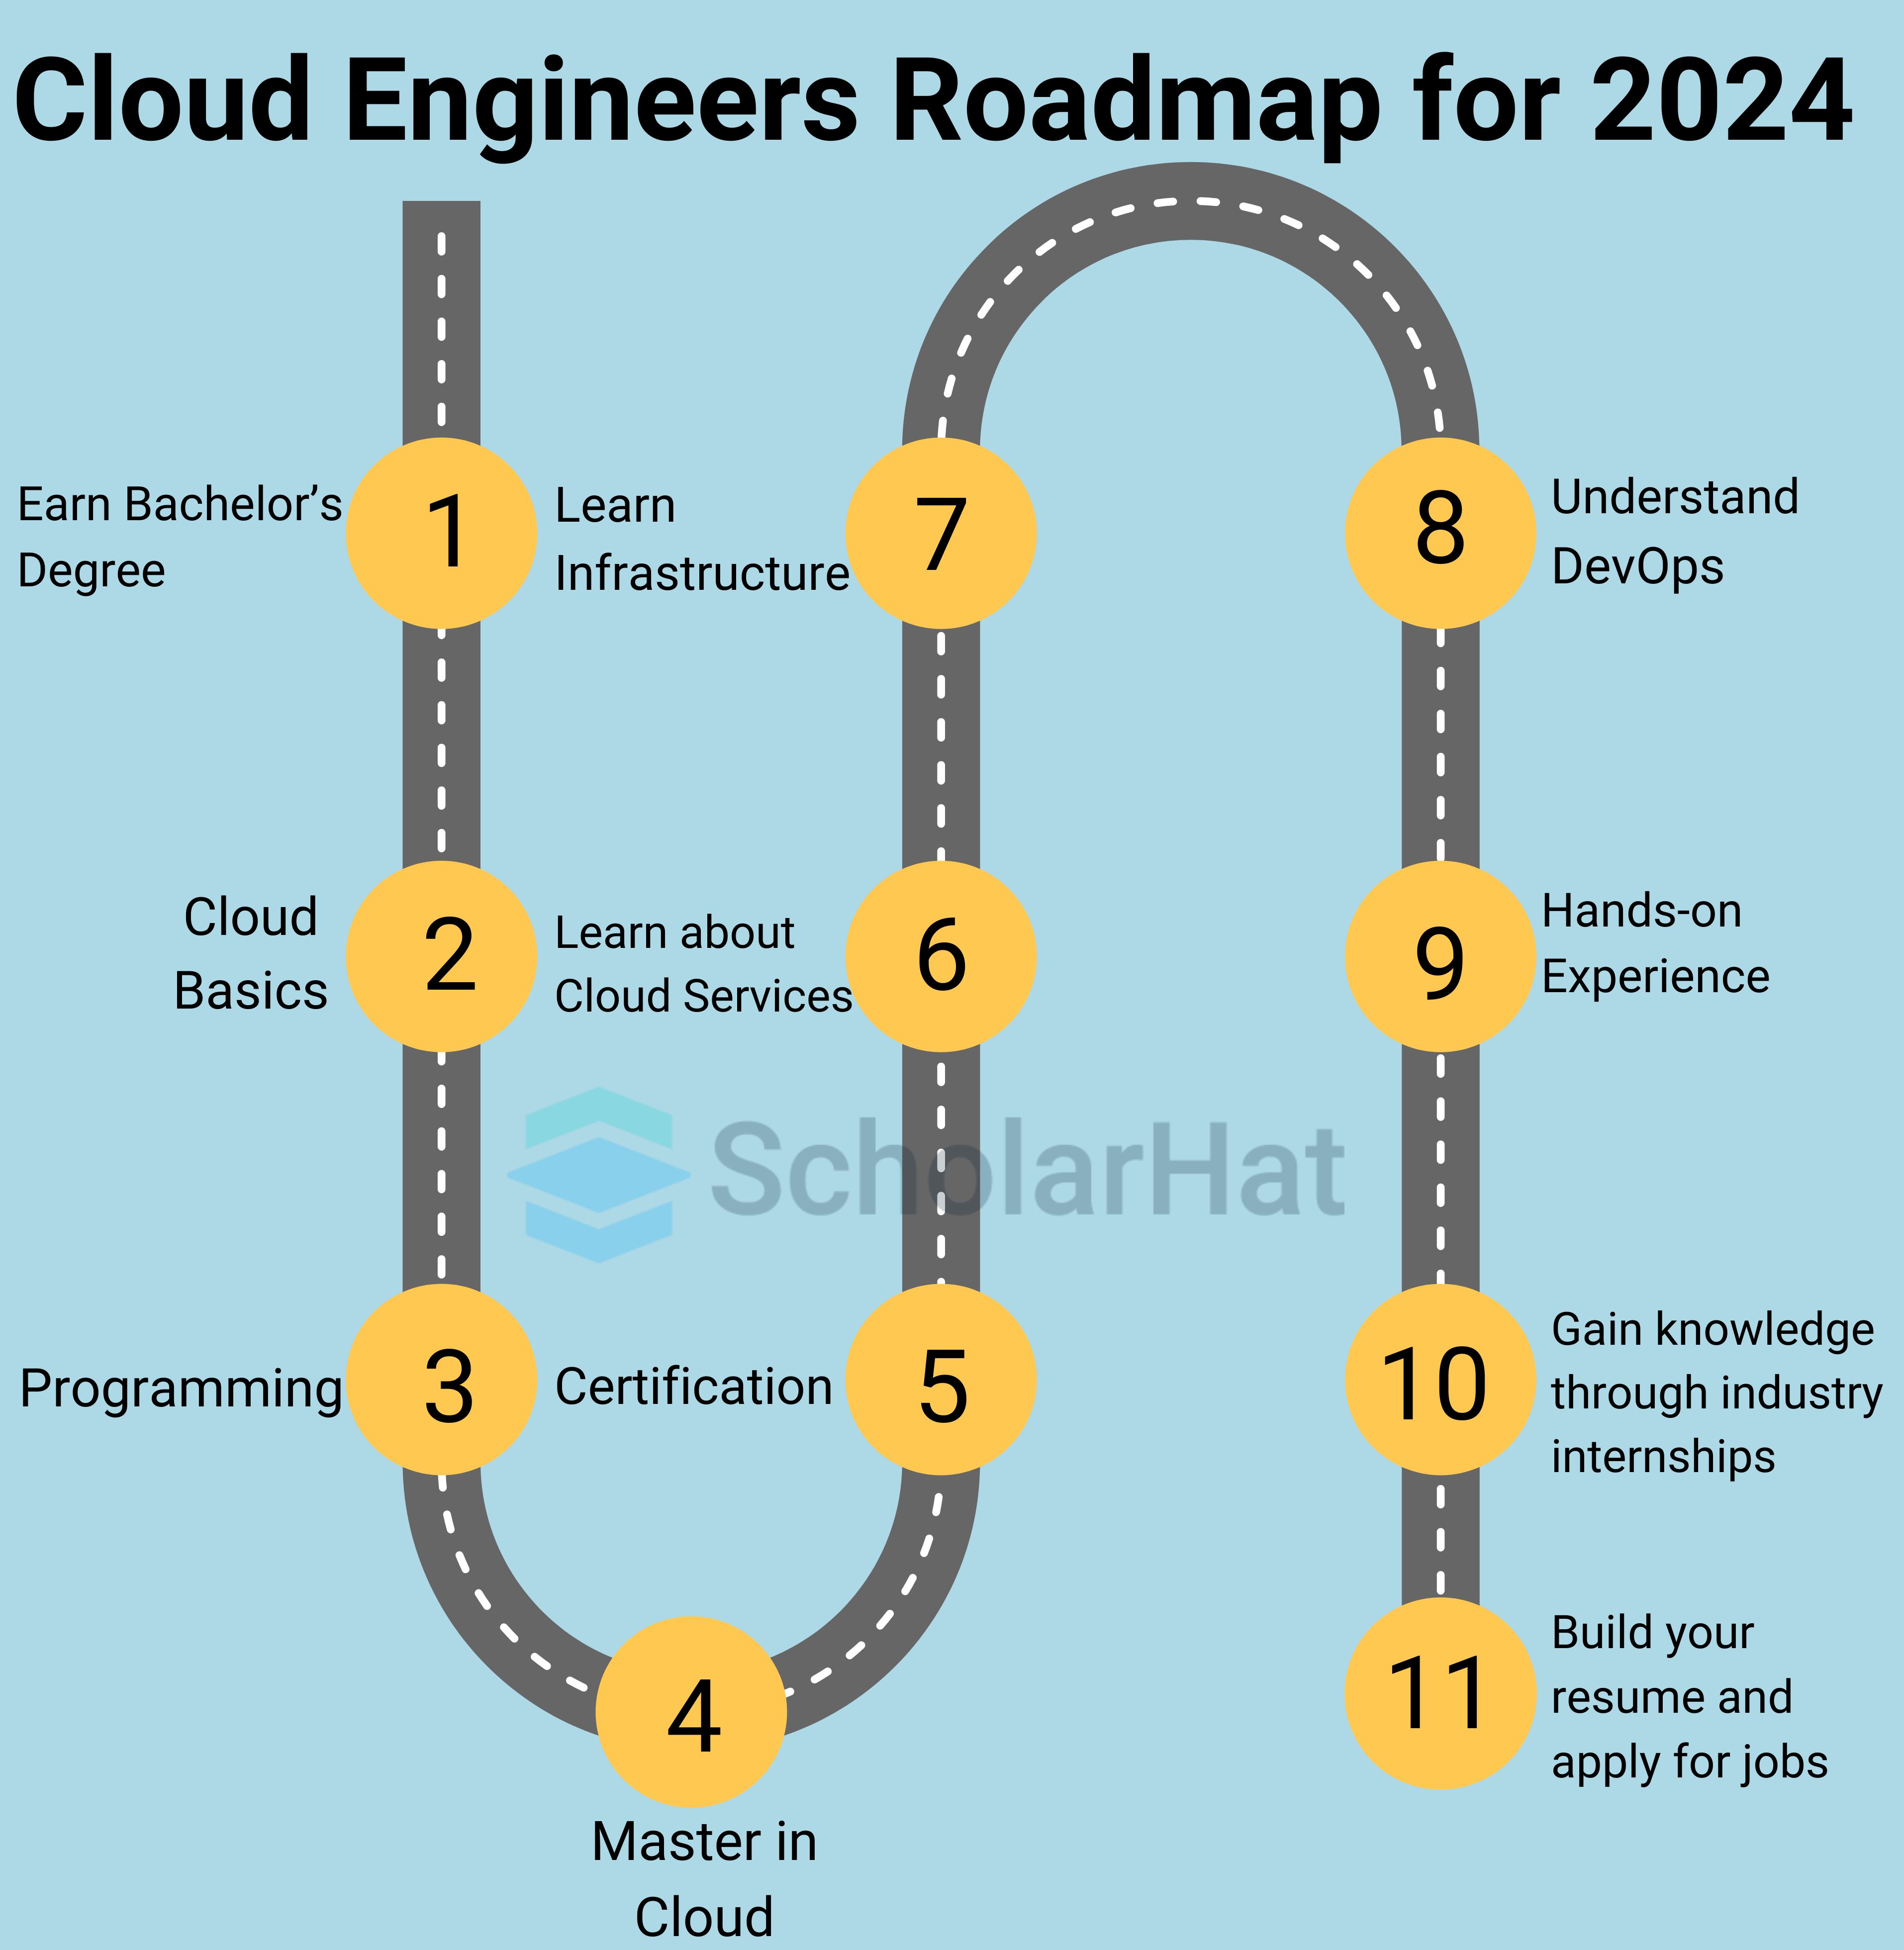 Cloud engineer roadmap for 2024